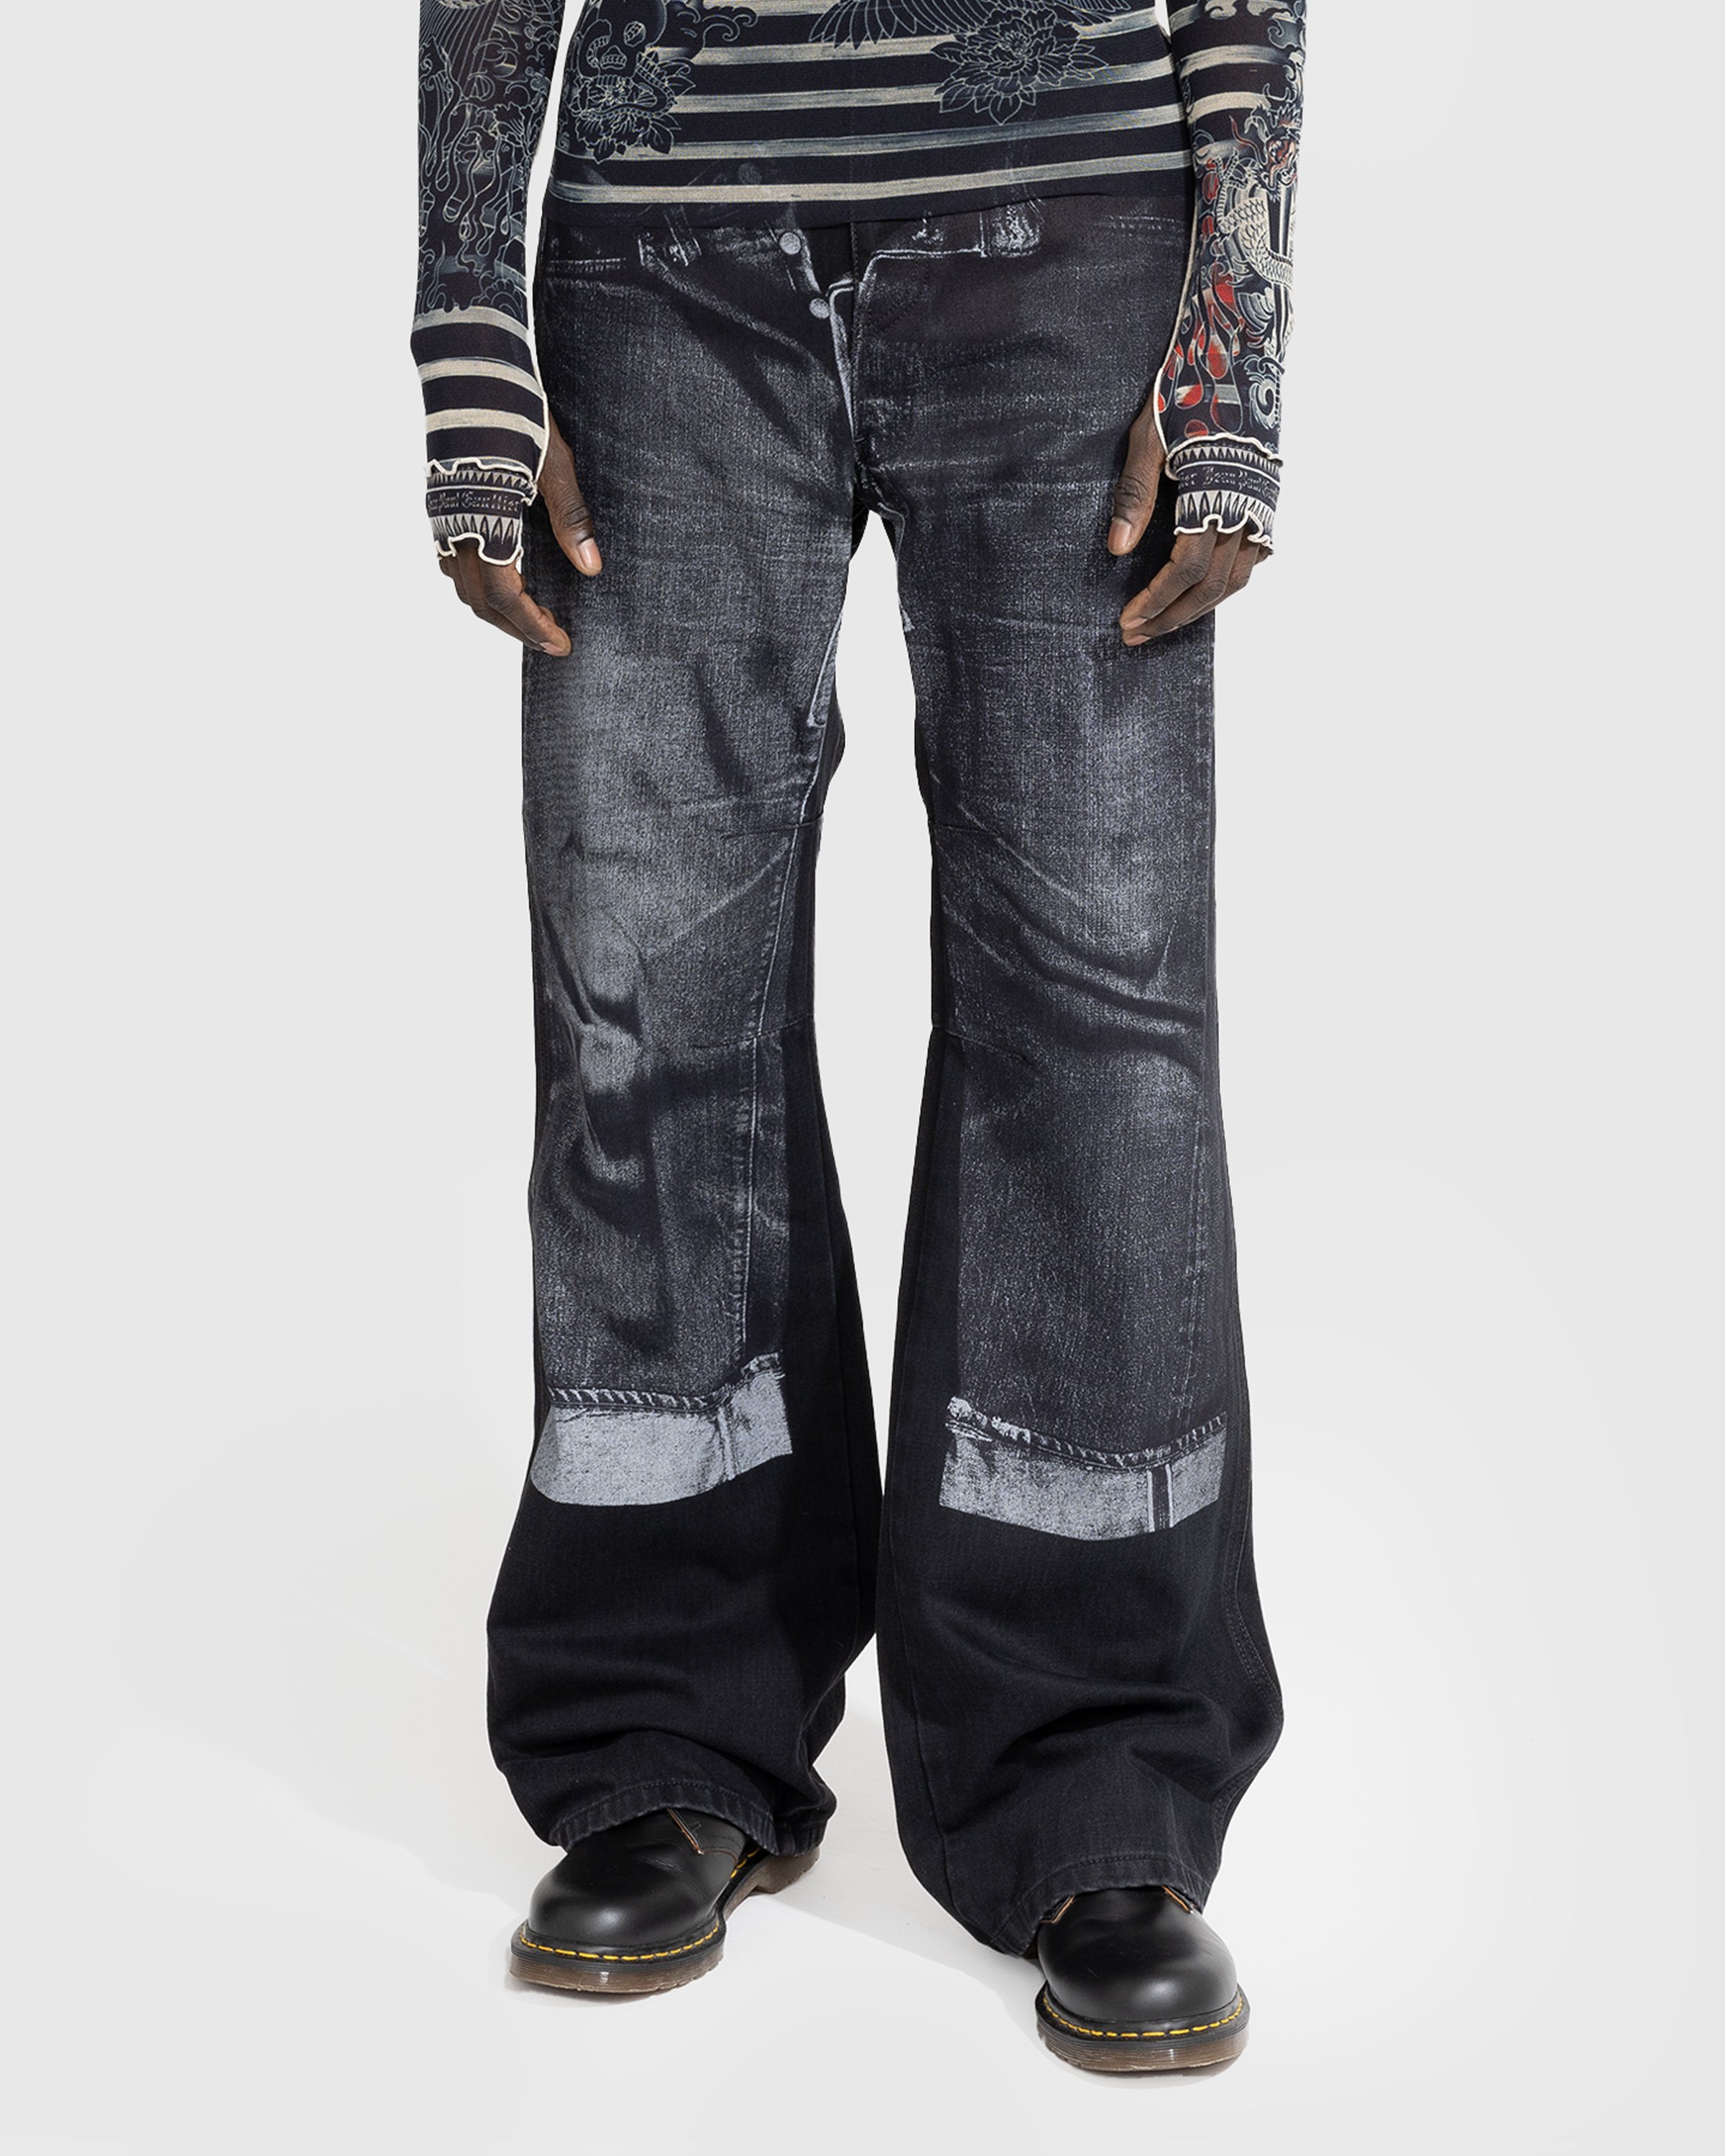 Jean Paul Gaultier - Denim Trompe L'oeil Jeans Black/Gray - Clothing - Black - Image 2